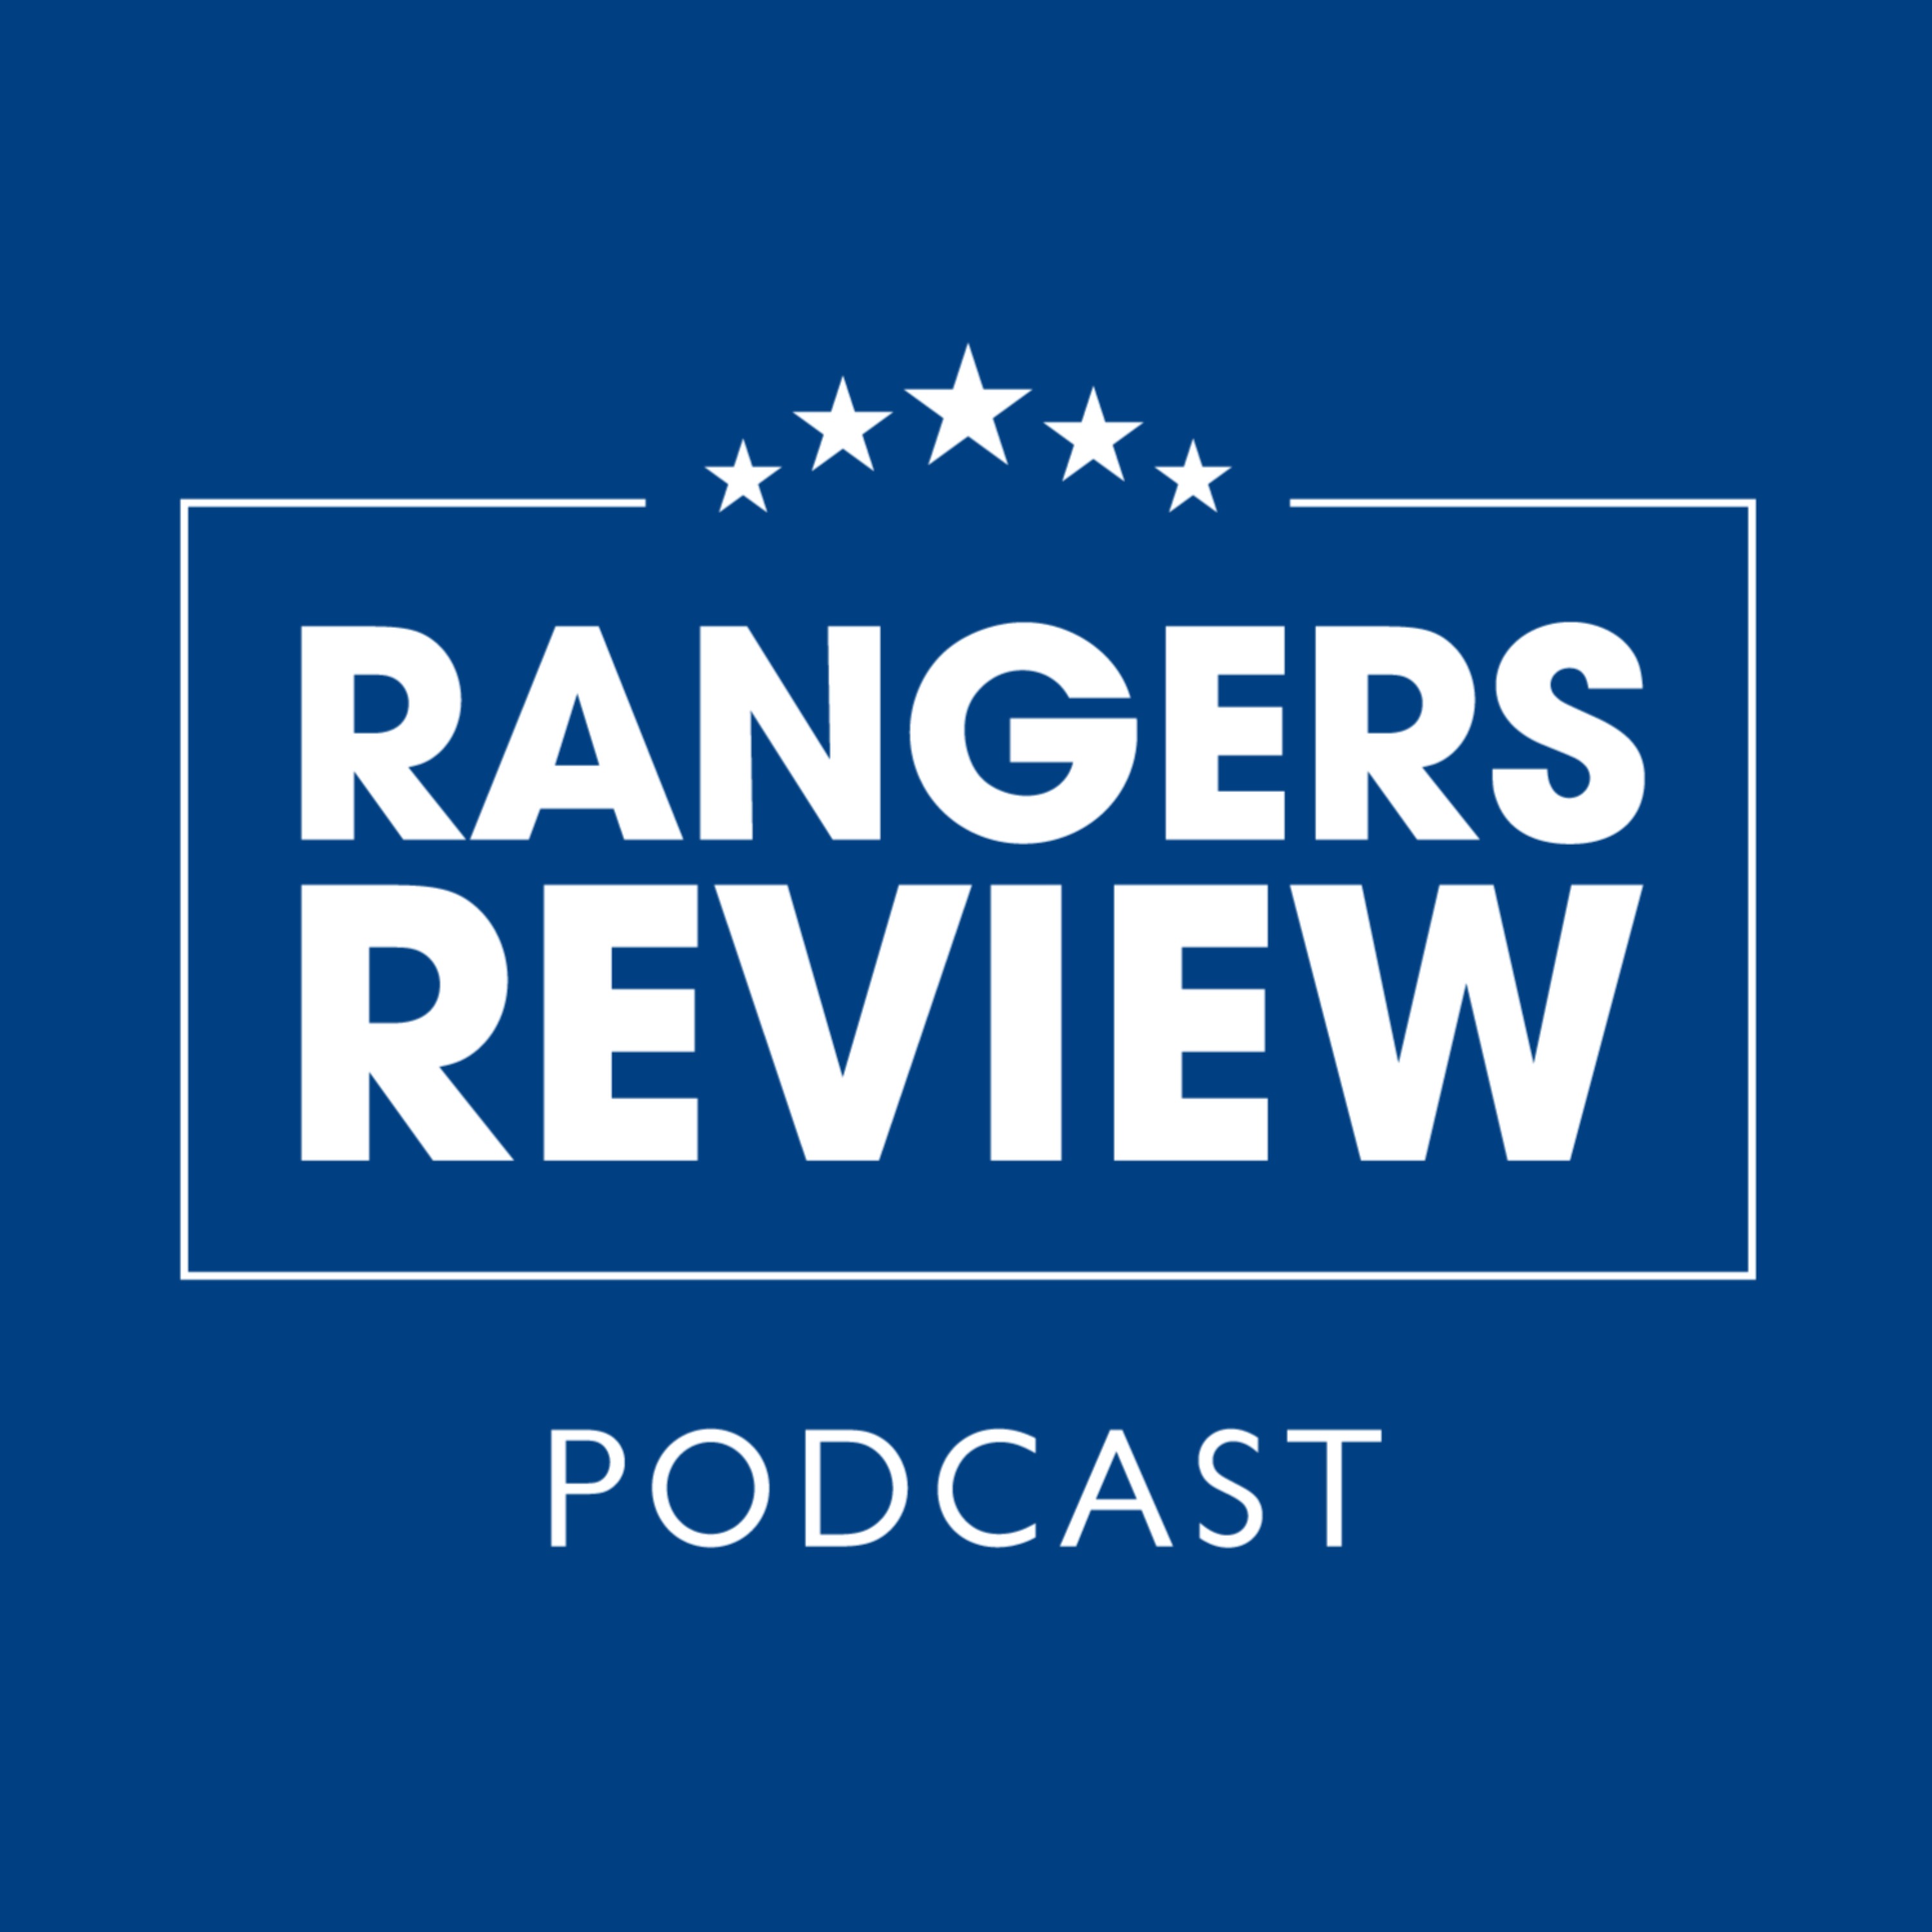 Just how good were Rangers against Hibs?